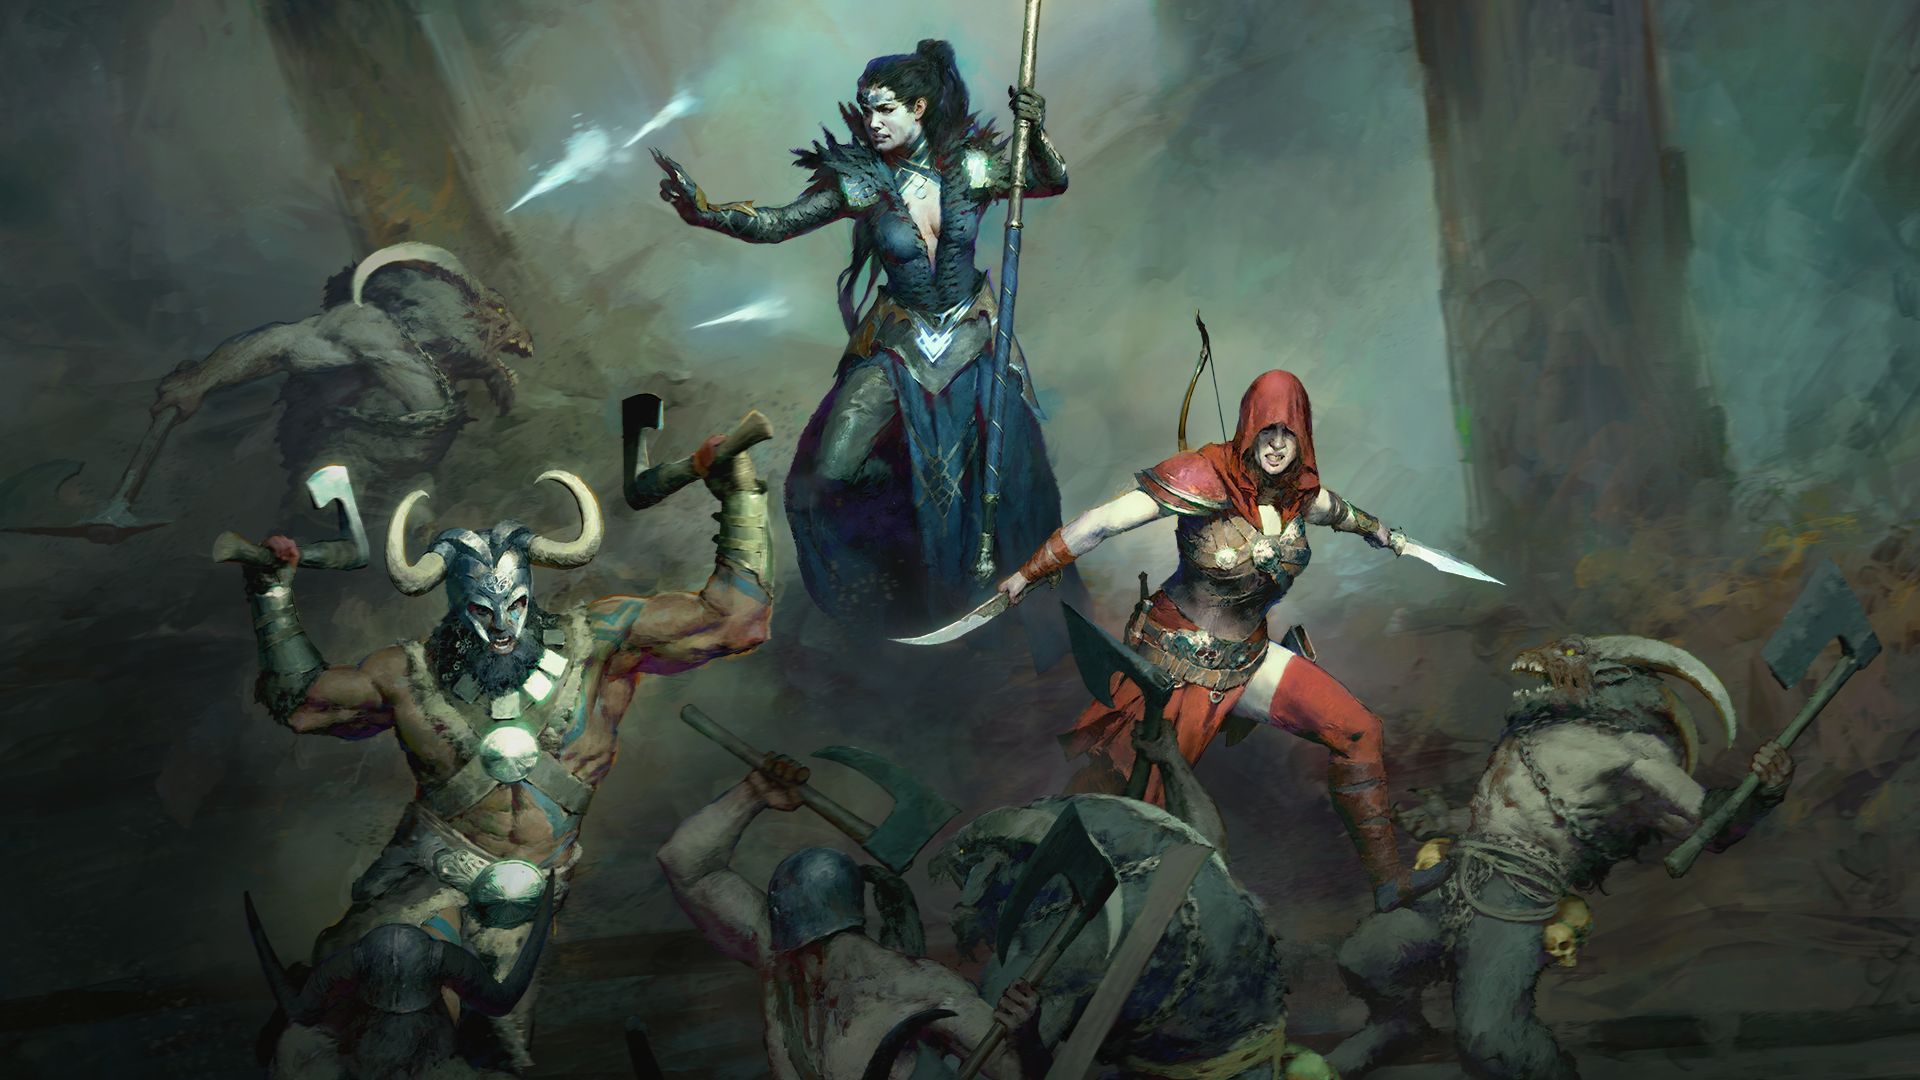 Diablo 4 Surpassed 10 Million Players in June